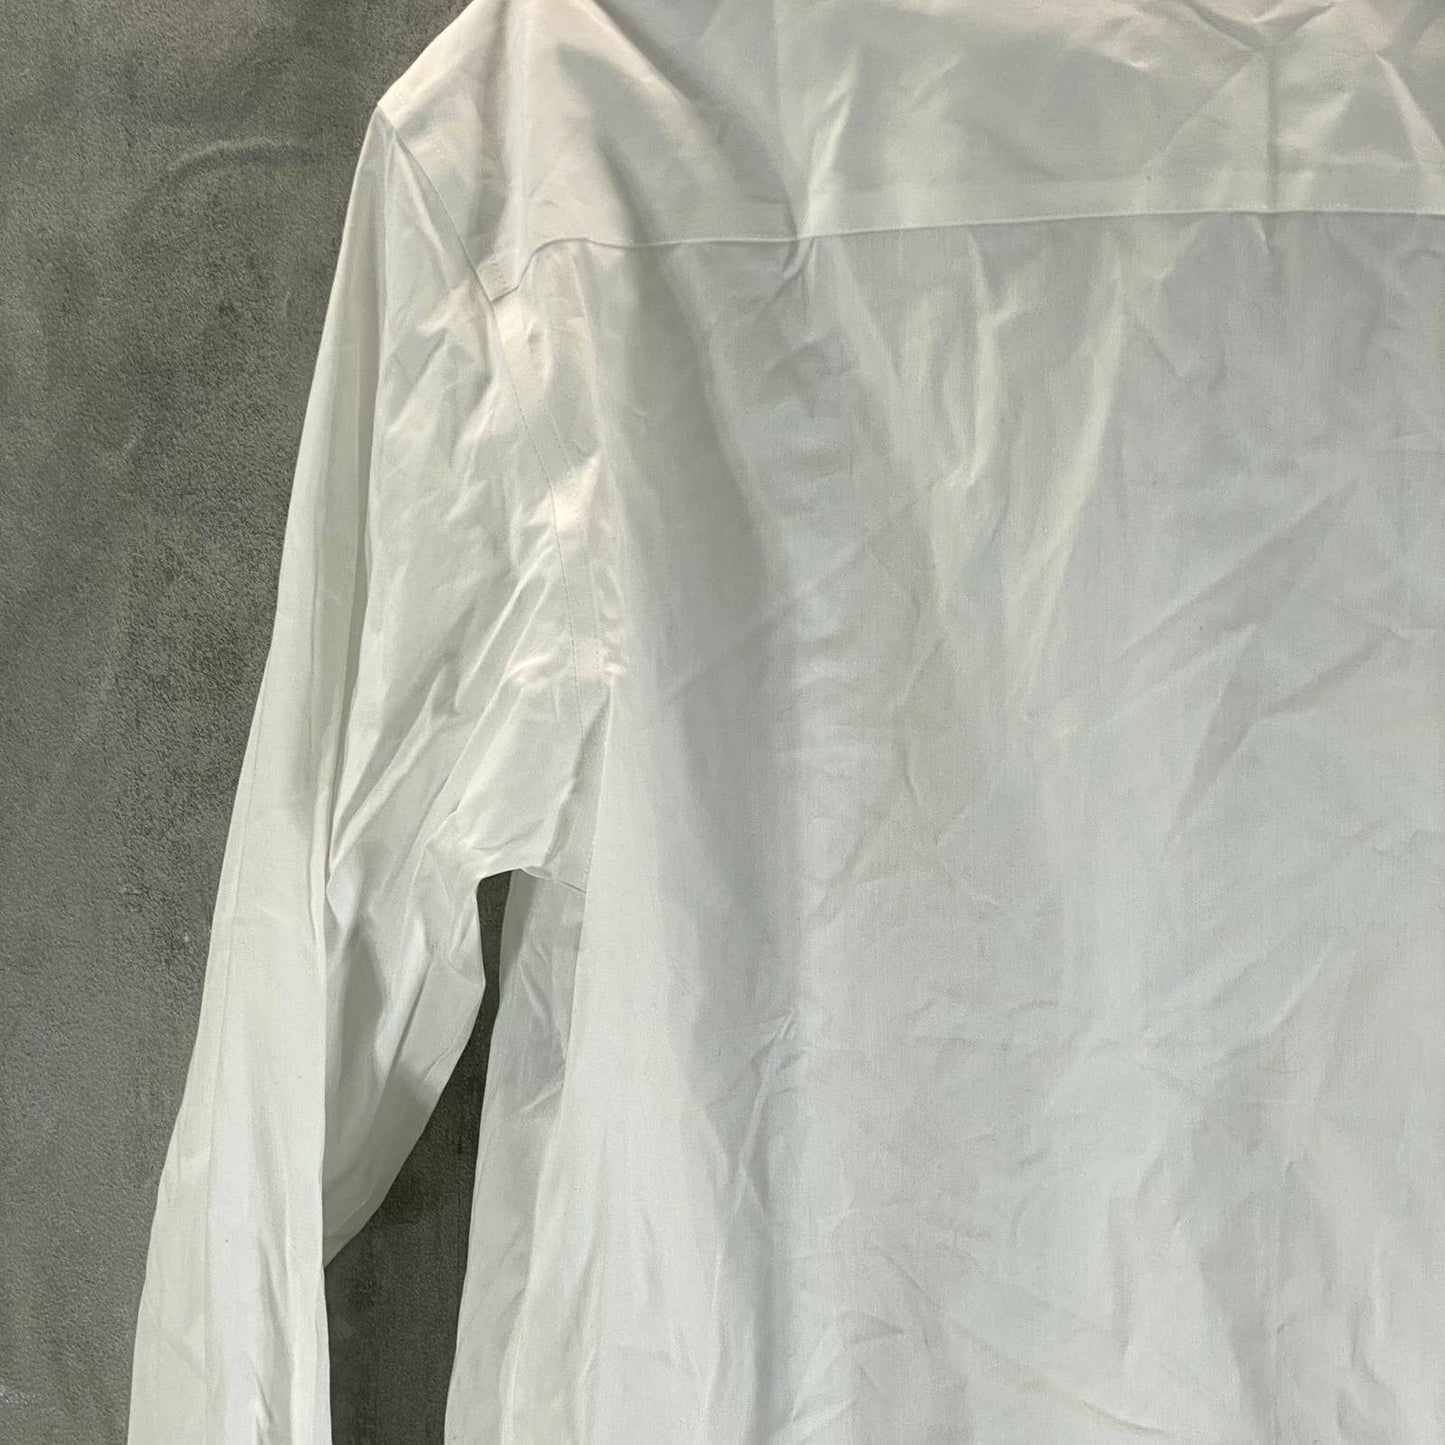 ALFANI AlfaTech Men's White Solid Regular-Fit Dress Shirt SZ S(14-14.5 32/33)